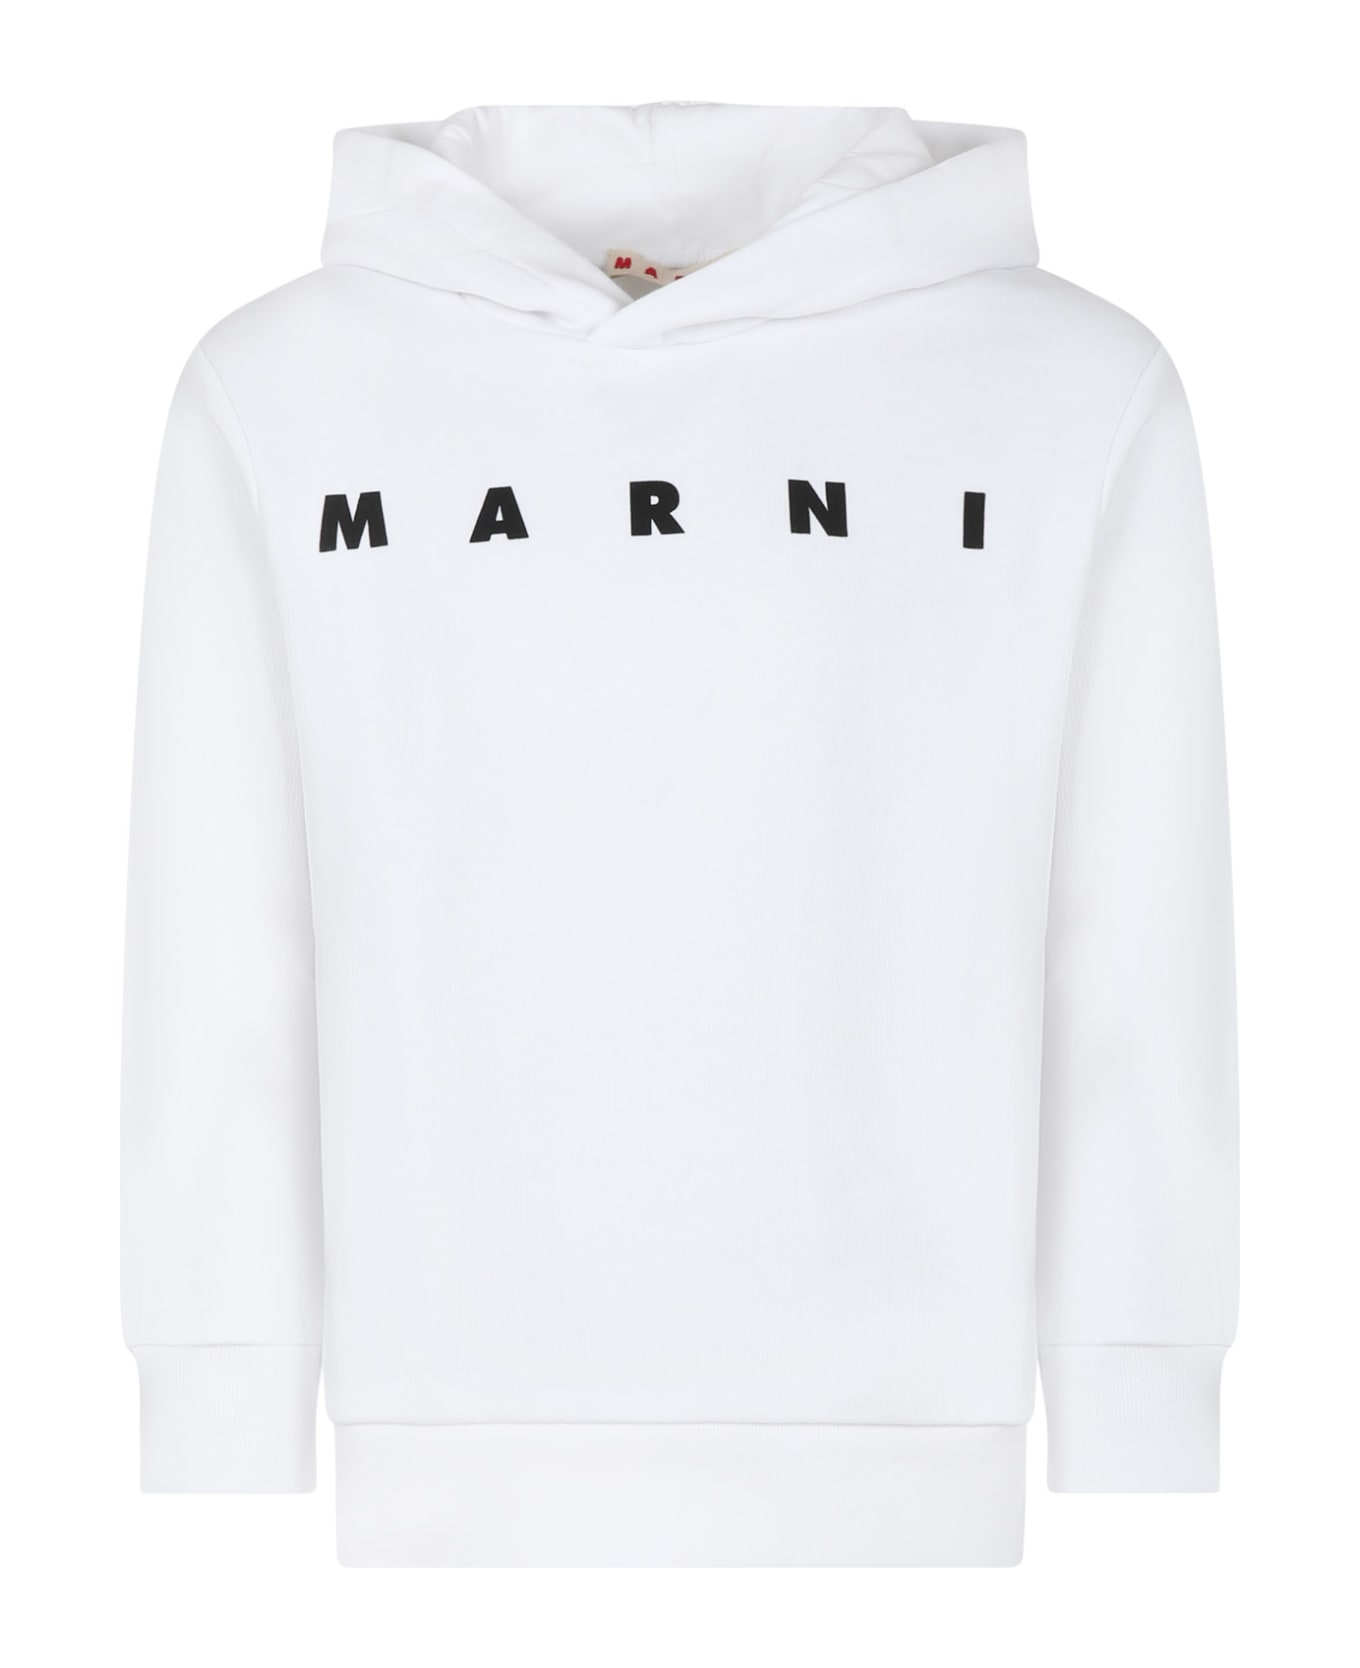 Marni White Sweatshirt For Kids With Logo - White